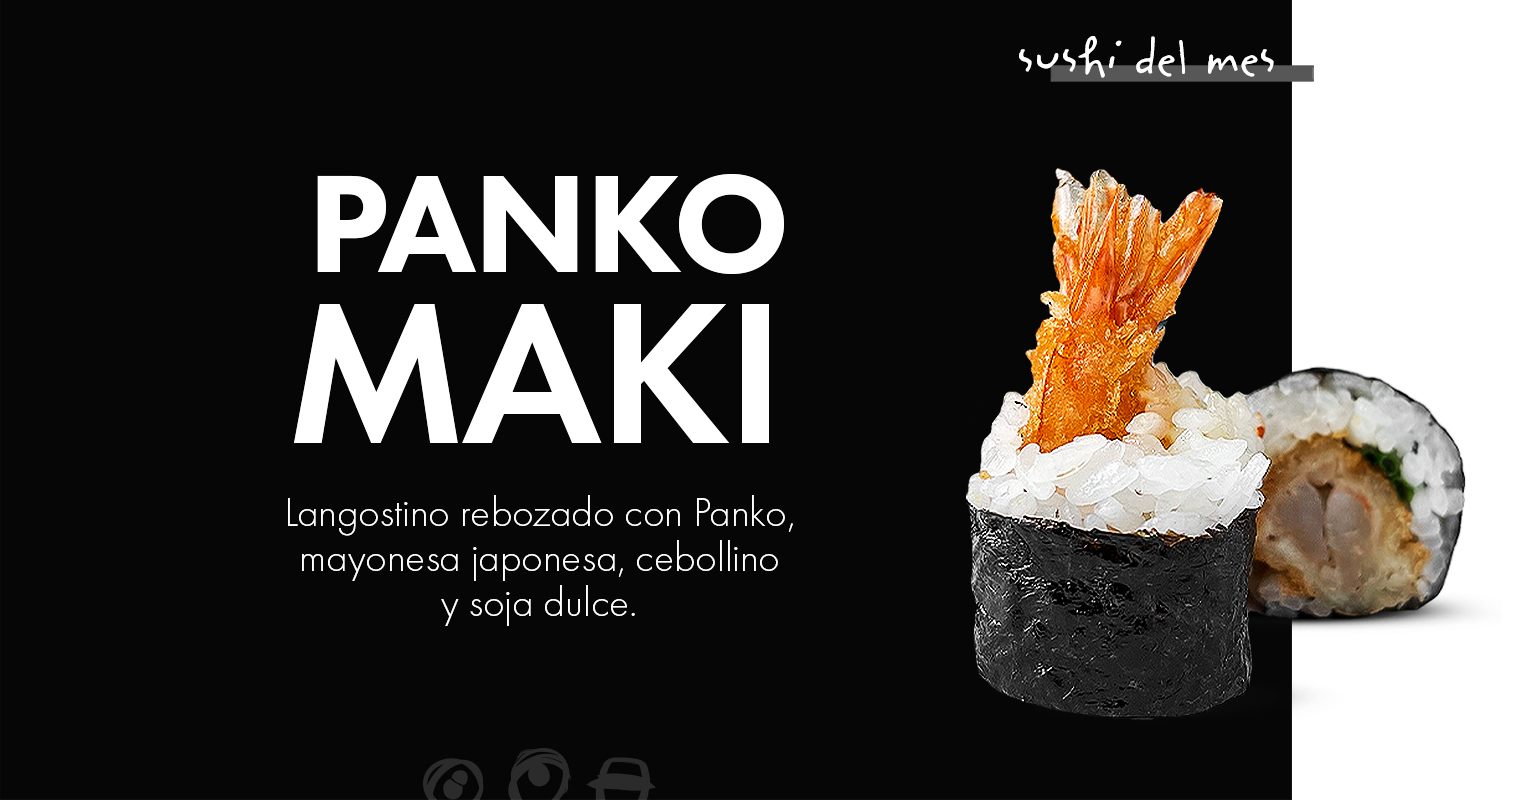 Panko Maki, sushi del mes de mayo